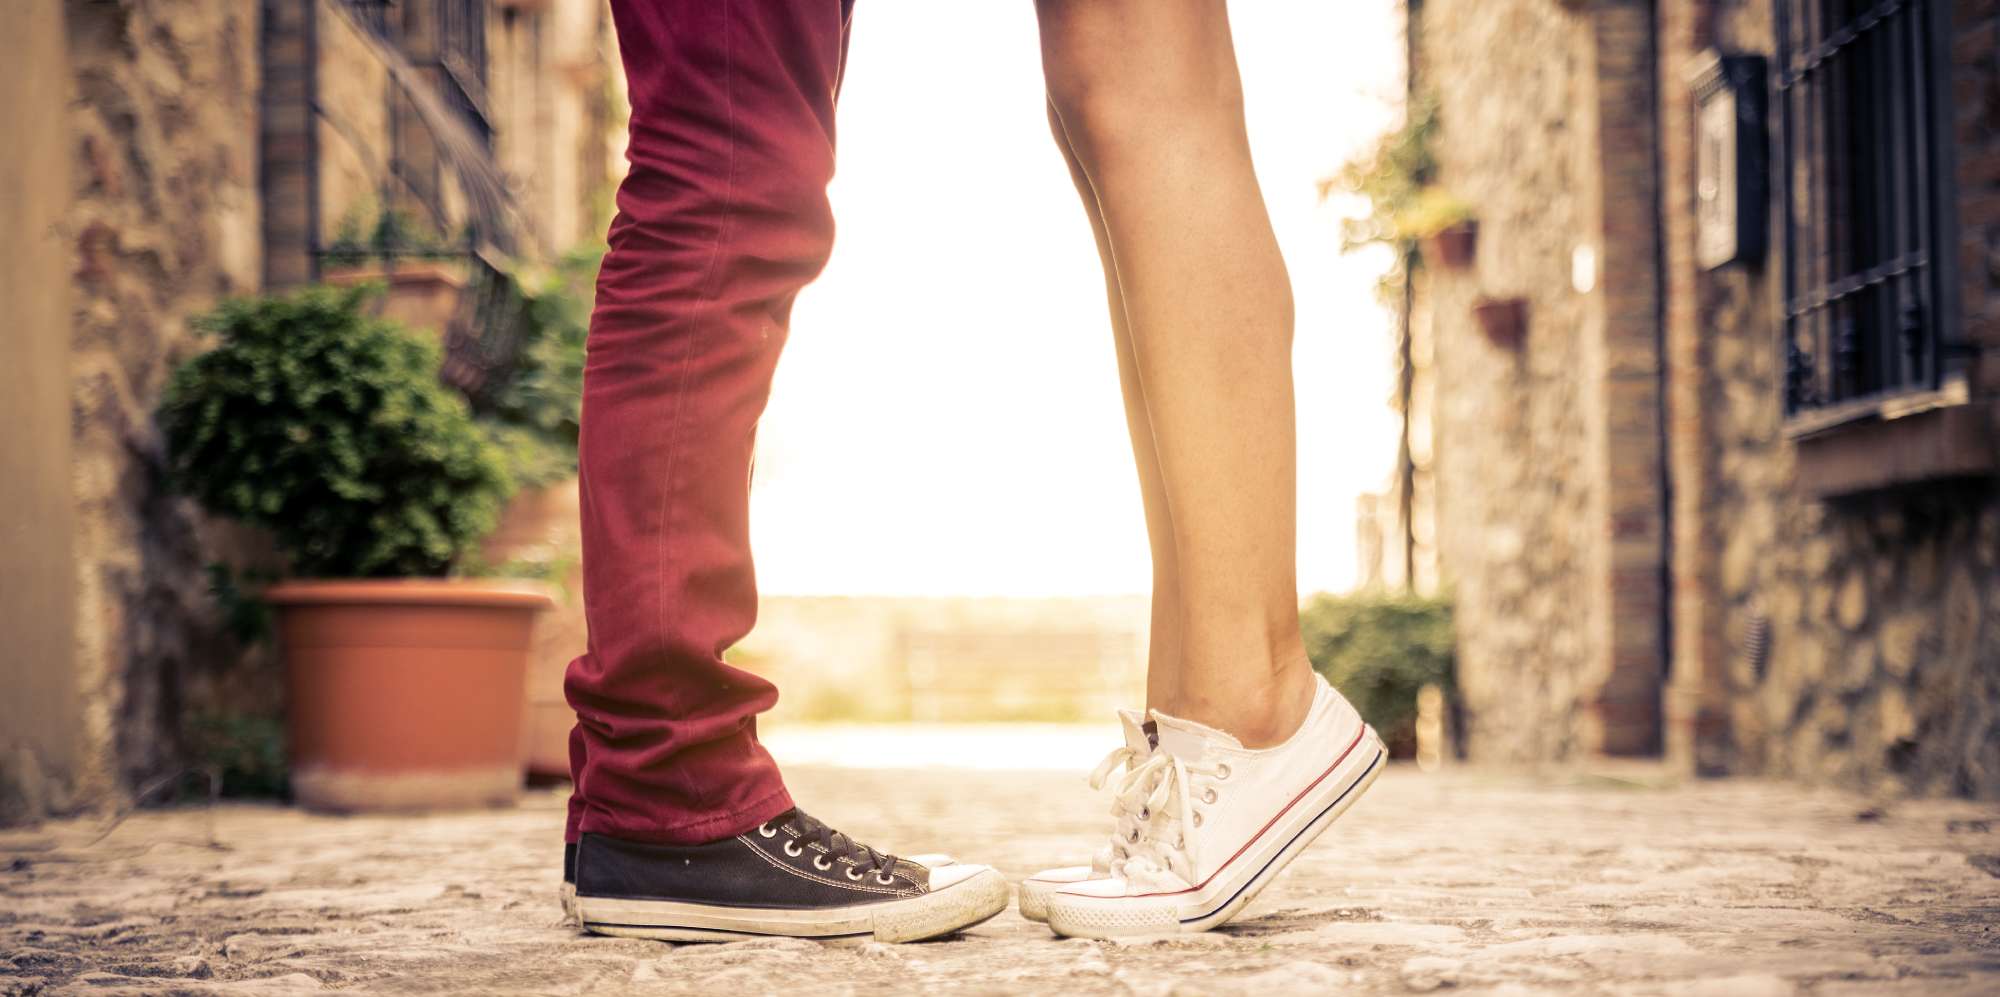 legal-relationship-status-couples-feet